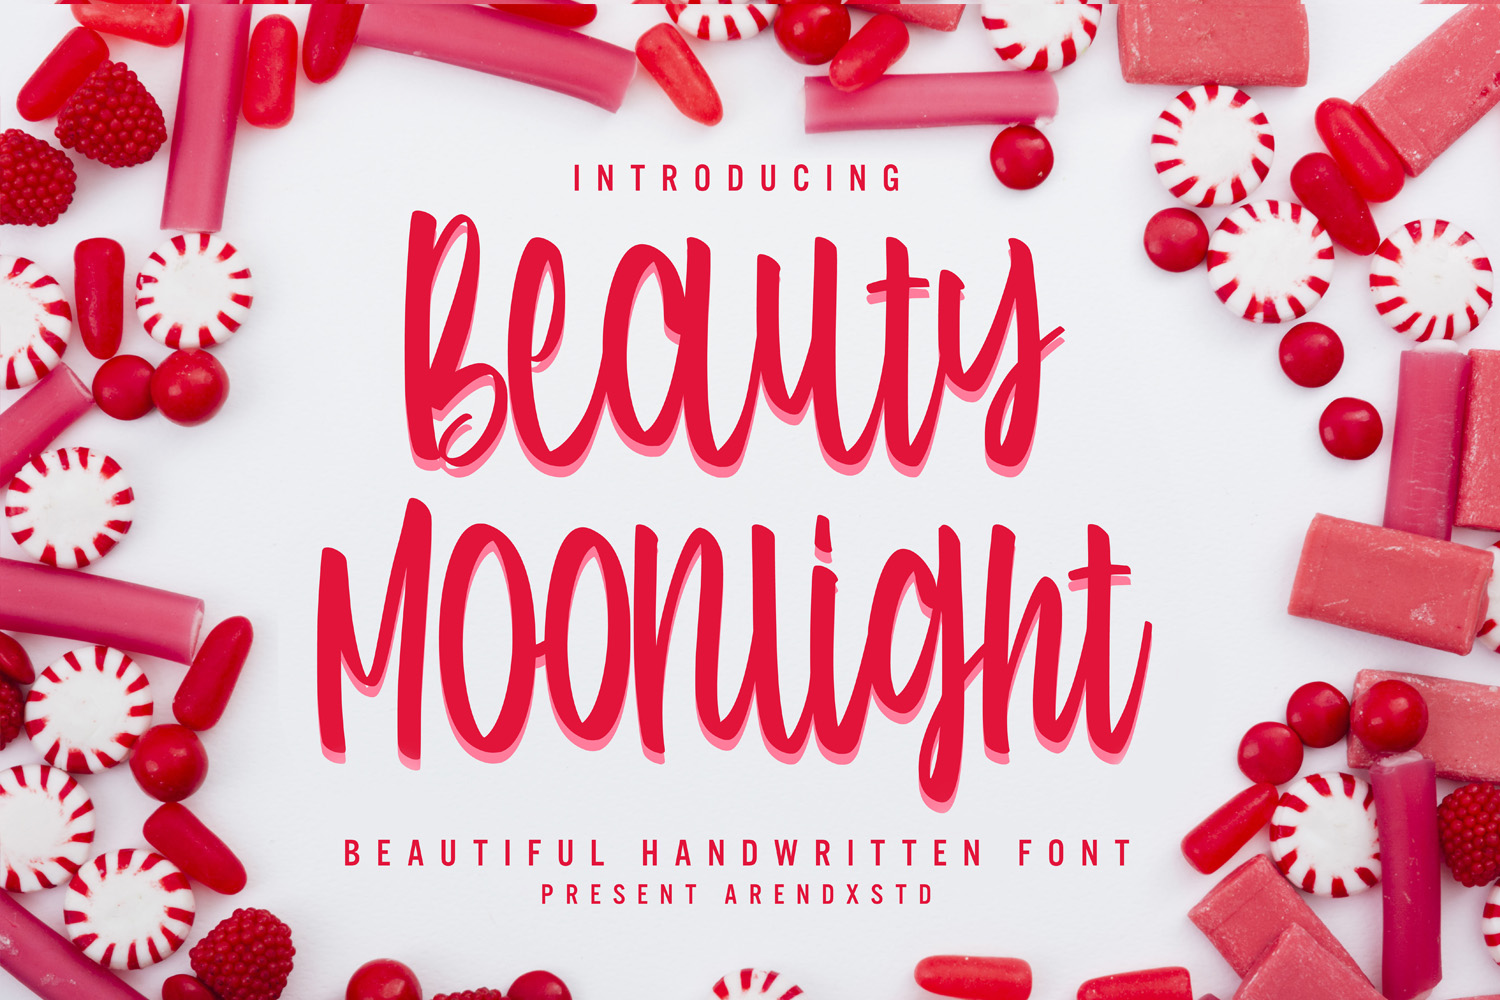 Beauty Moonlight